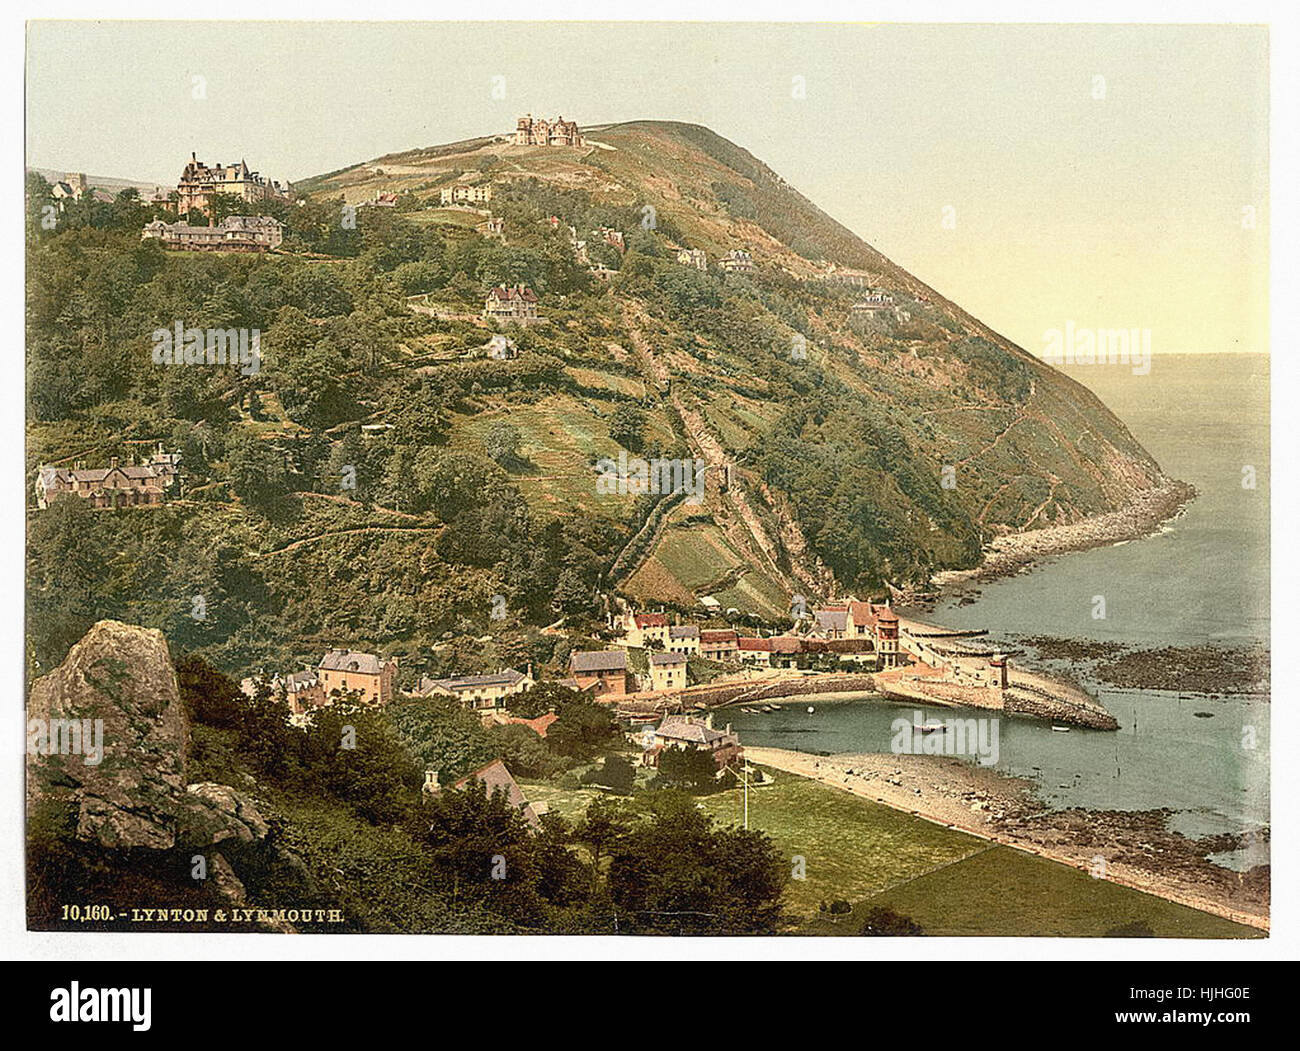 Gesamtansicht, Lynton und Lynmouth, England - Photochrom XIXth Jahrhundert Stockfoto